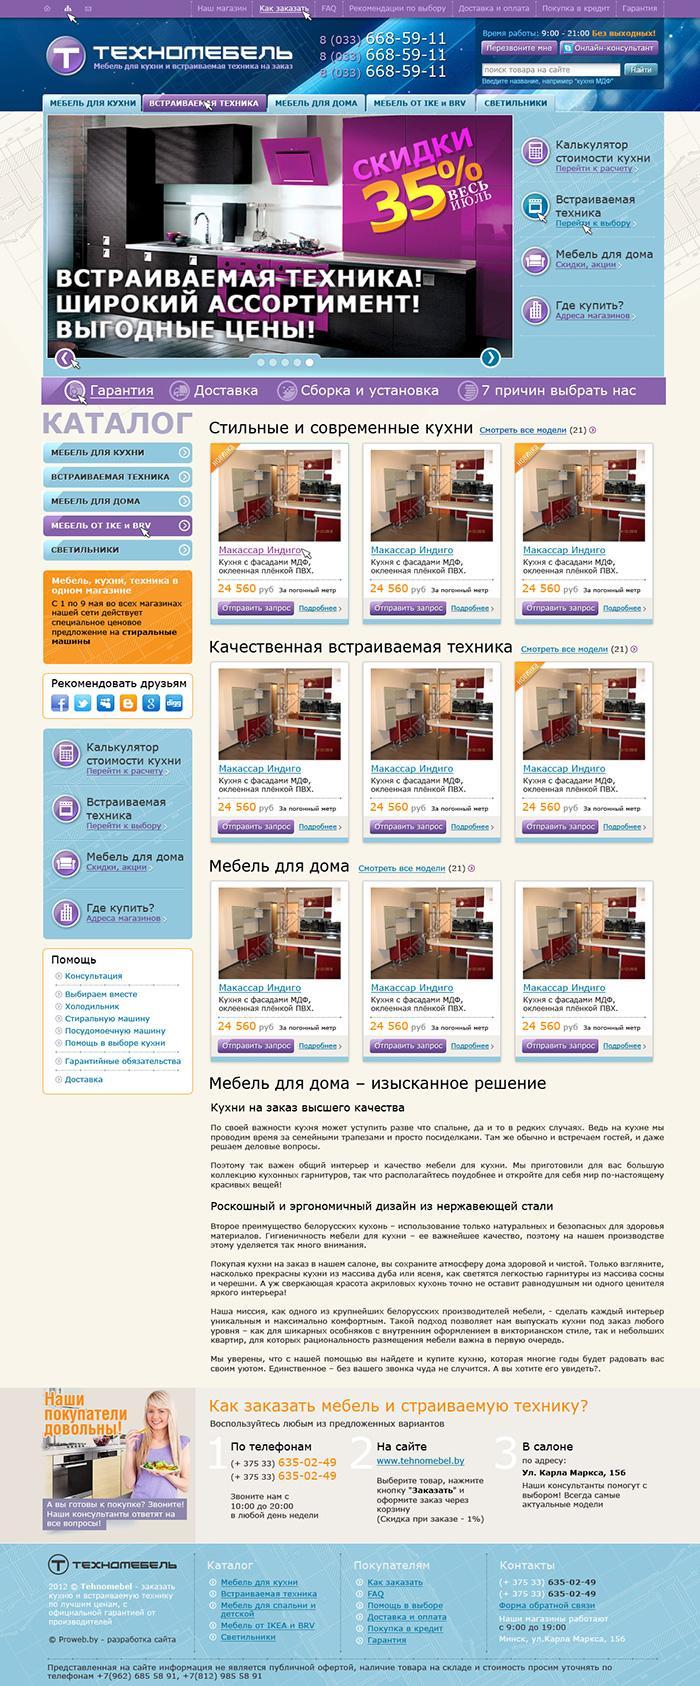 Интернет-магазин "ТехноМебель" 2012 год